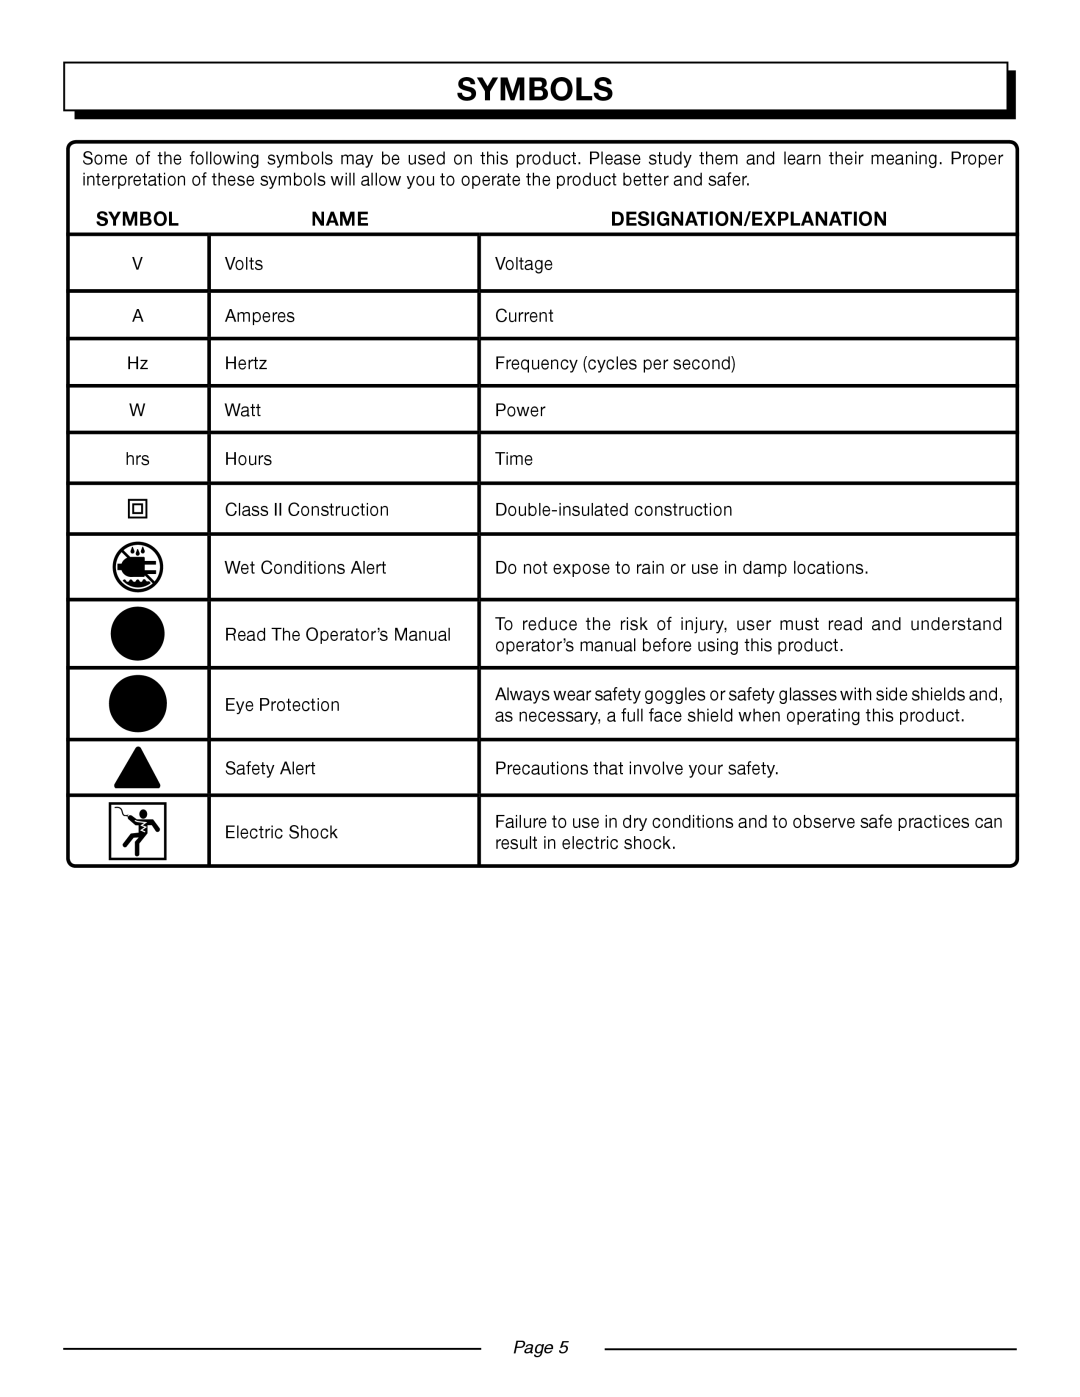 Homelite UT13220, UT13218 manual Symbols, Name, Designation/Explanation, Page 